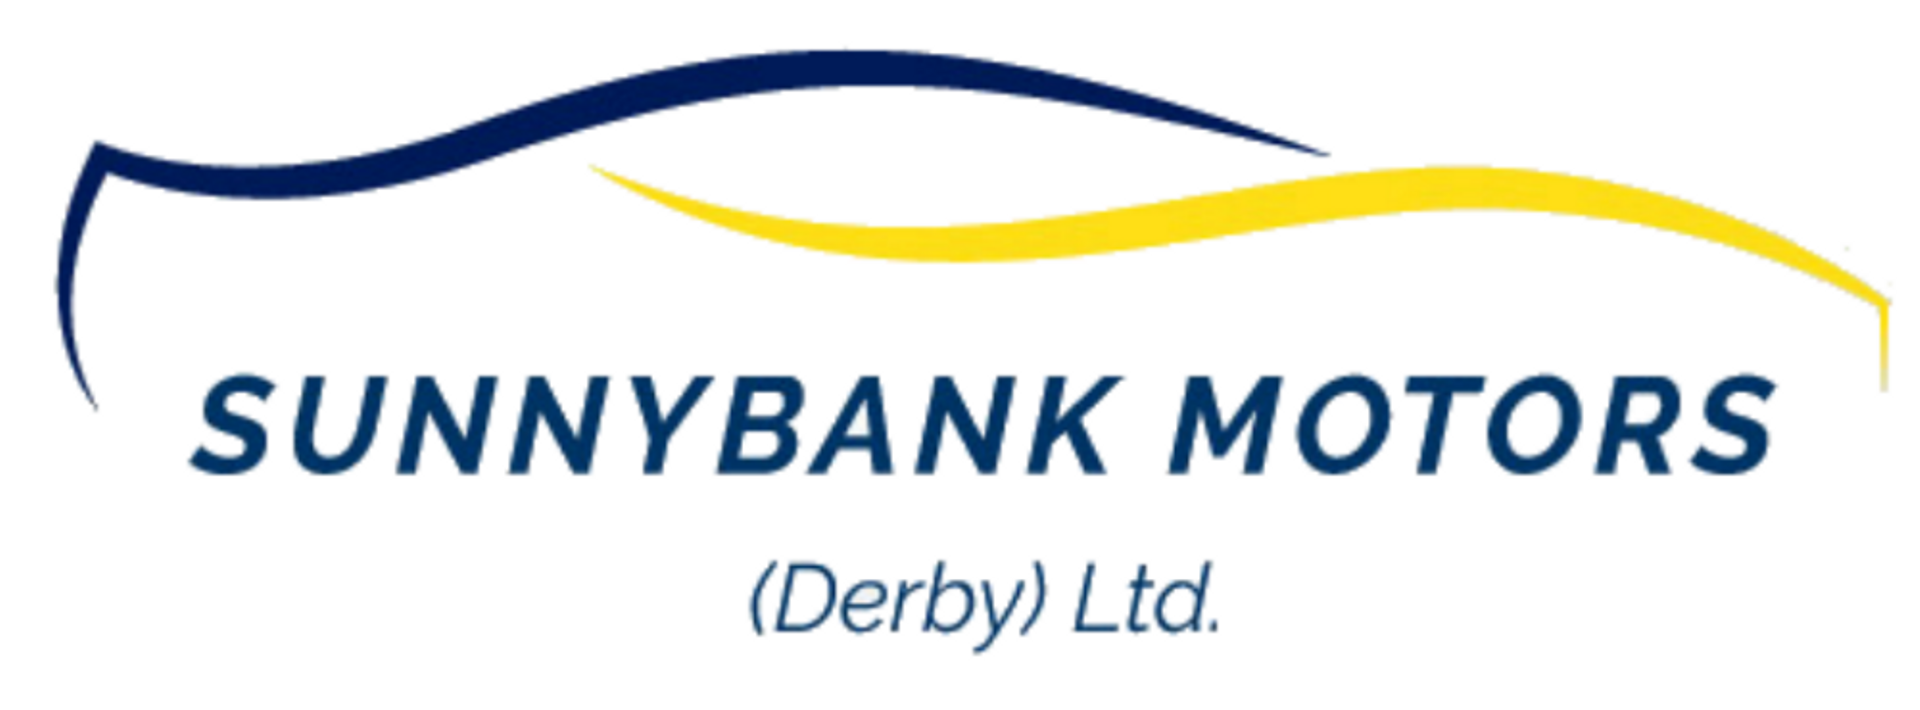 Sunnybank Motors (Derby) Ltd Logo